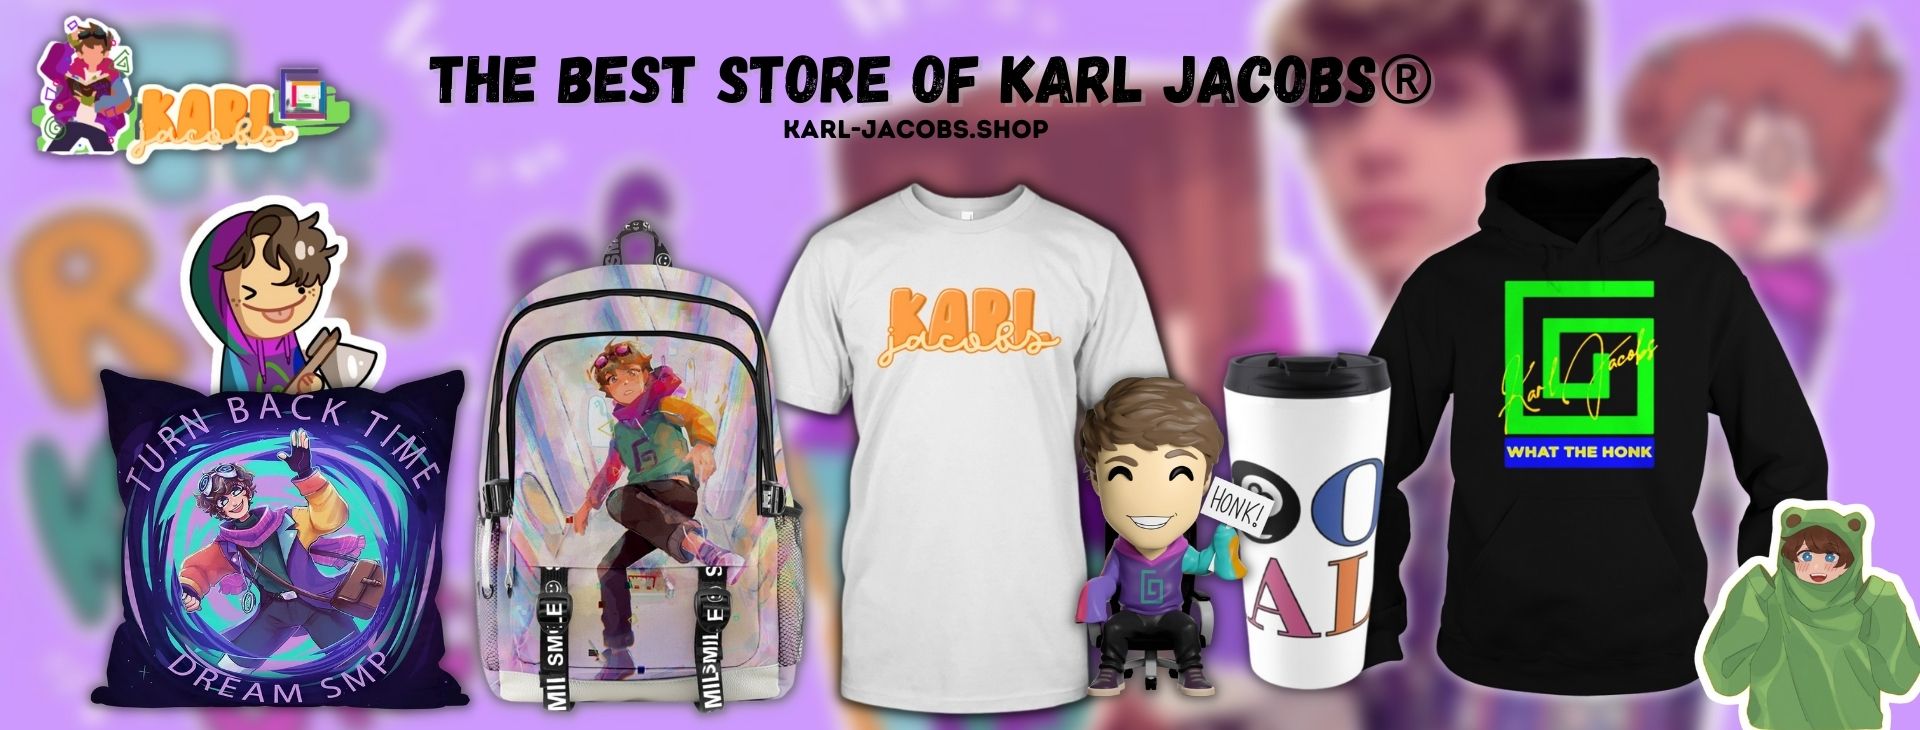 Karl jacobs Shop Banner - Karl Jacobs Shop